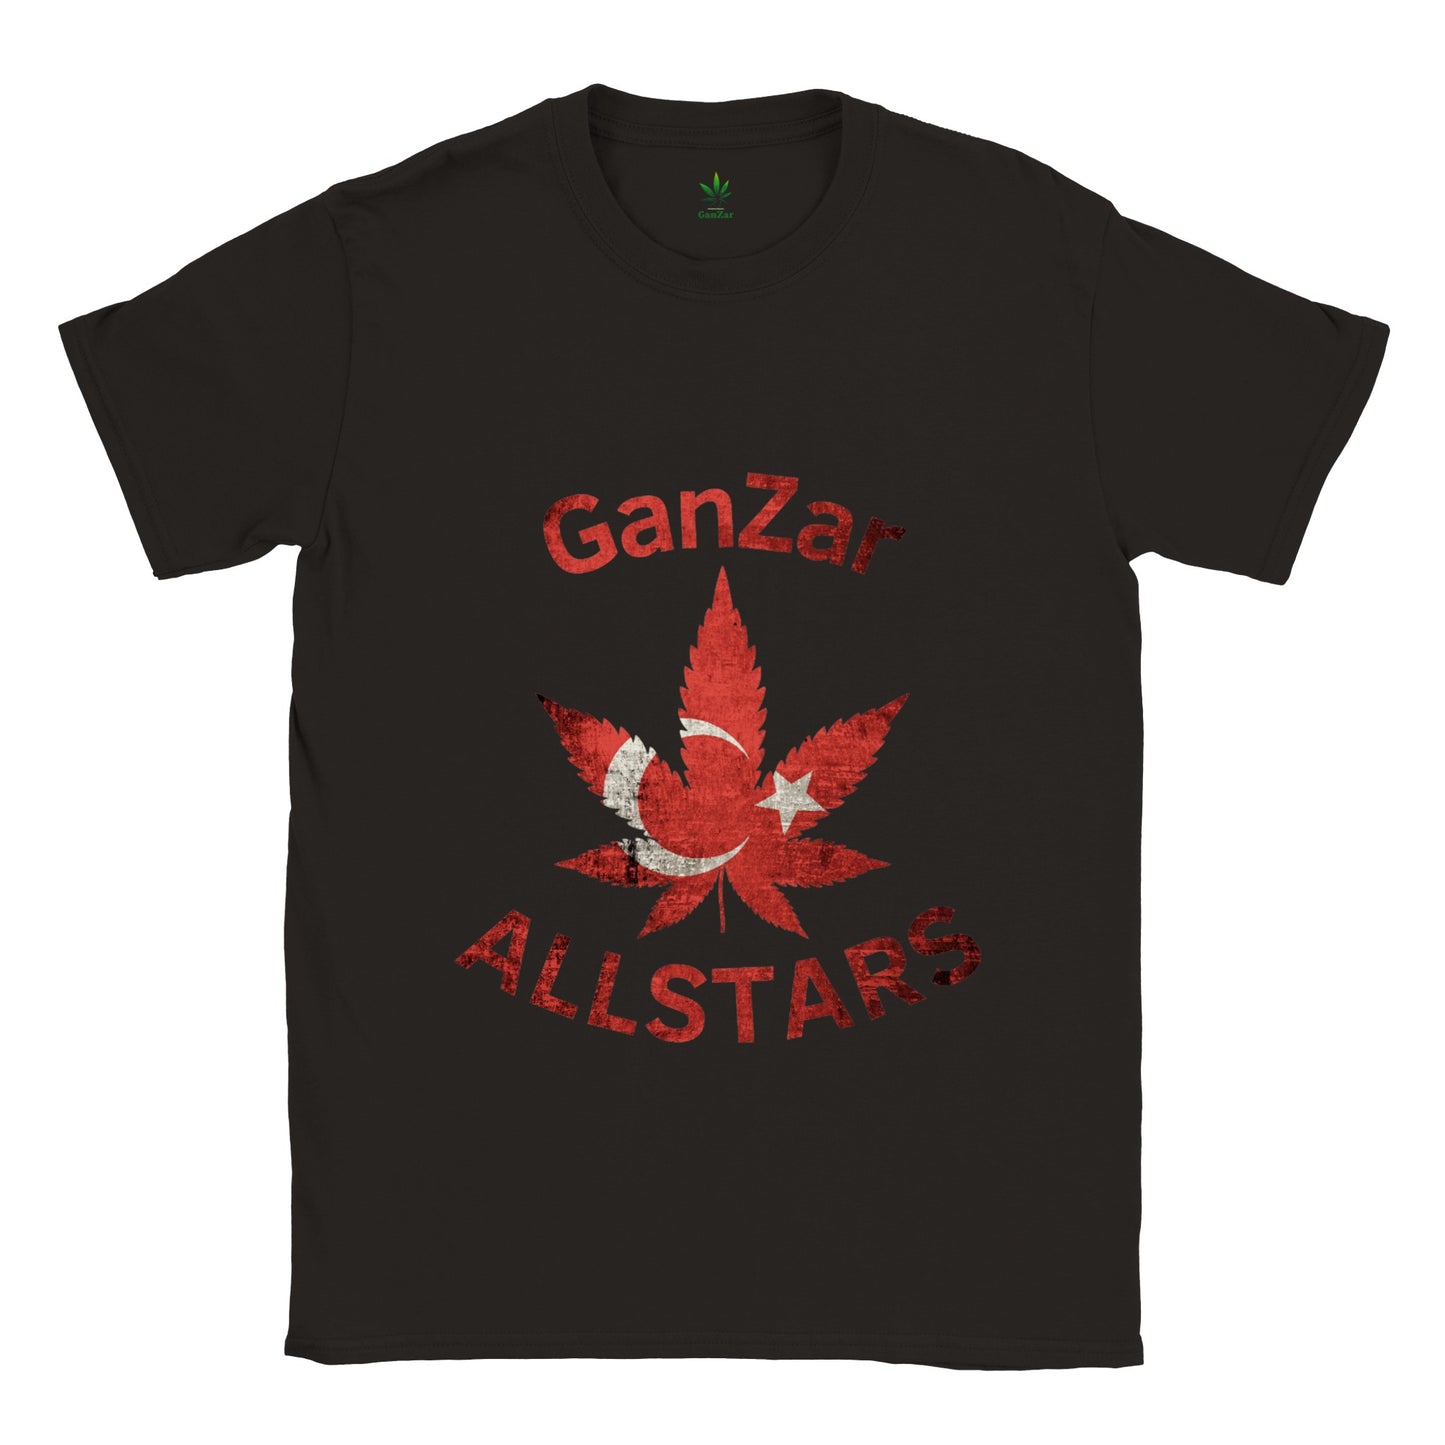 Türkiye GanZar Allstars Unisex T-Shirt